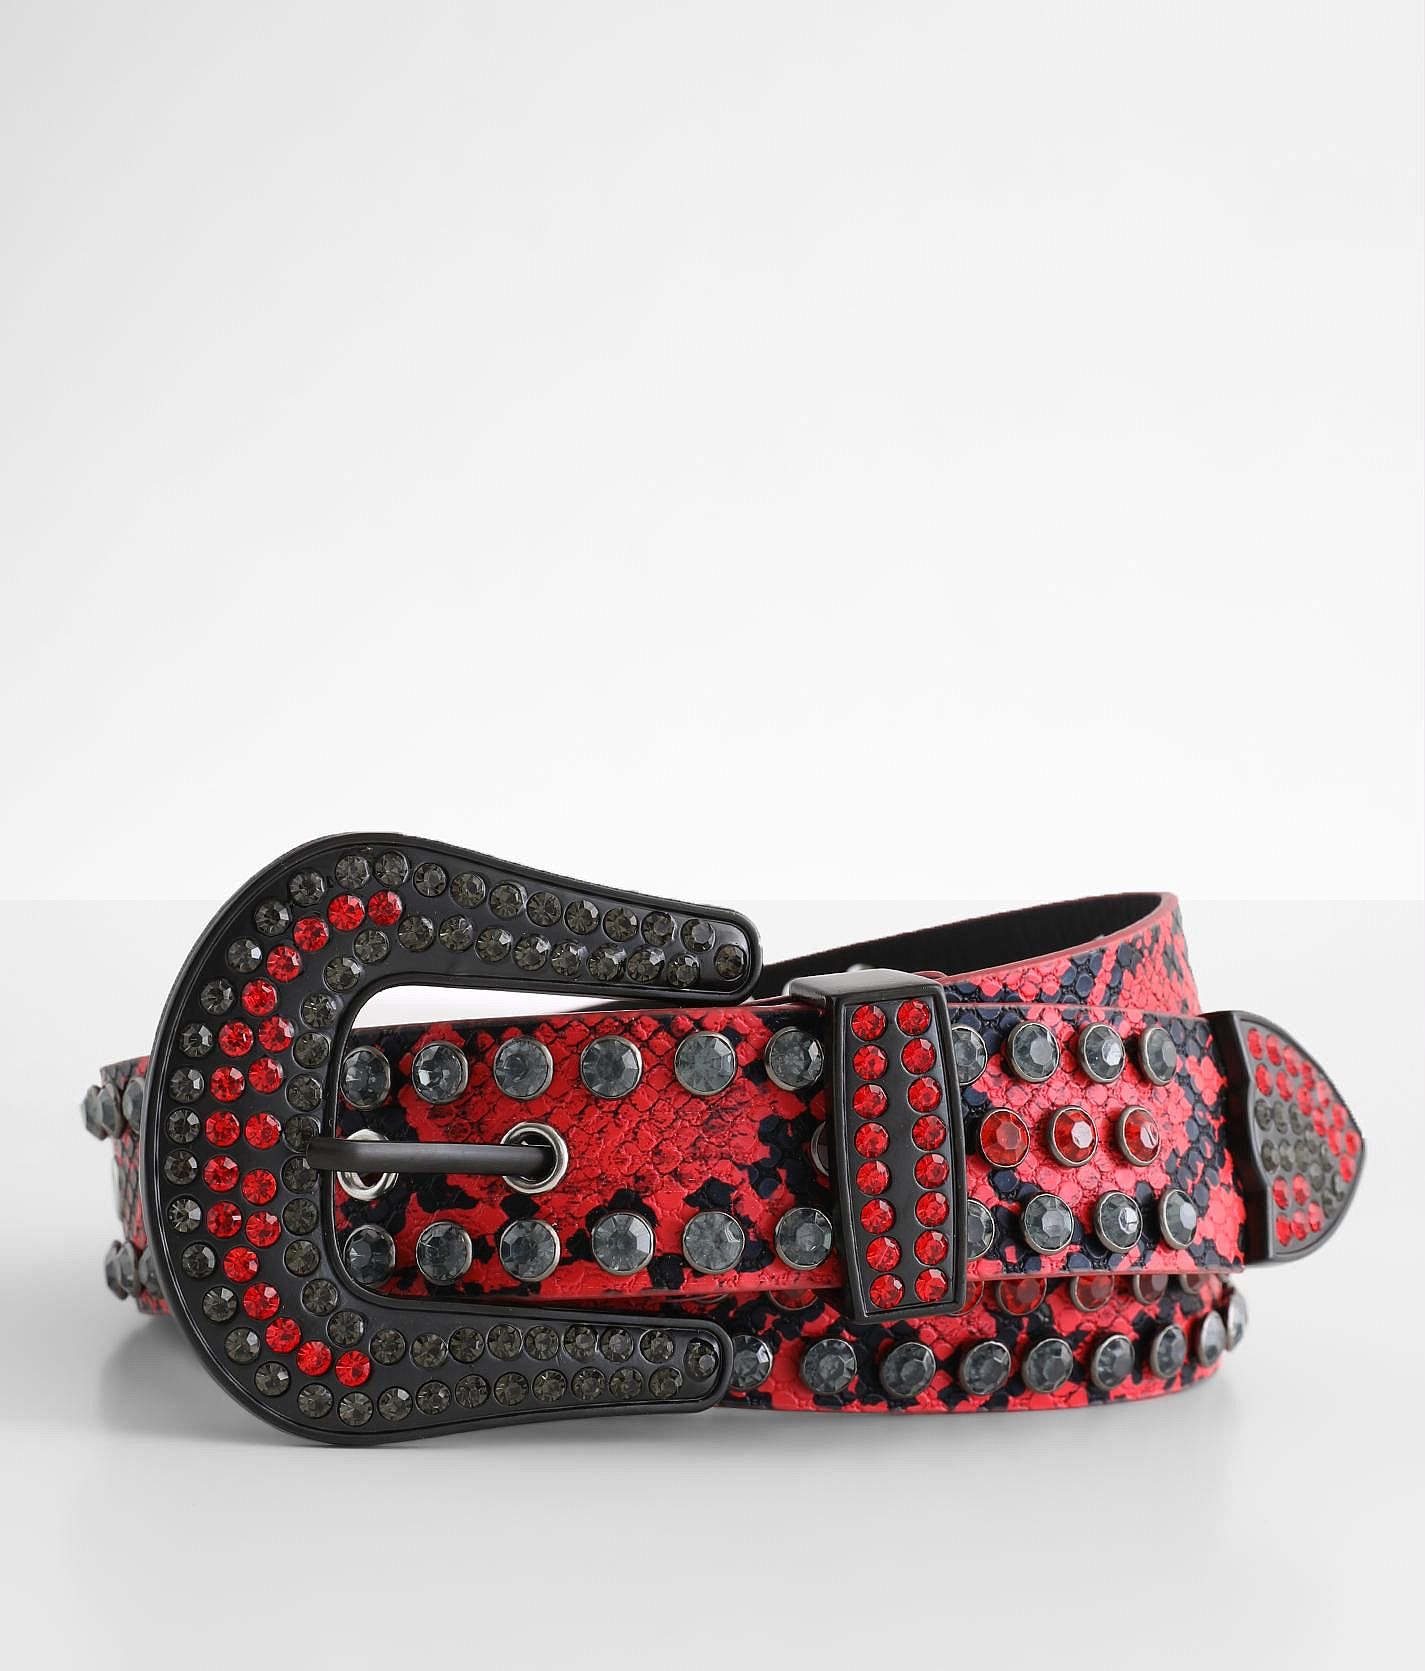 Industrial Indigo Bling Snake Print Belt - Men's Belts in Red | Buckle